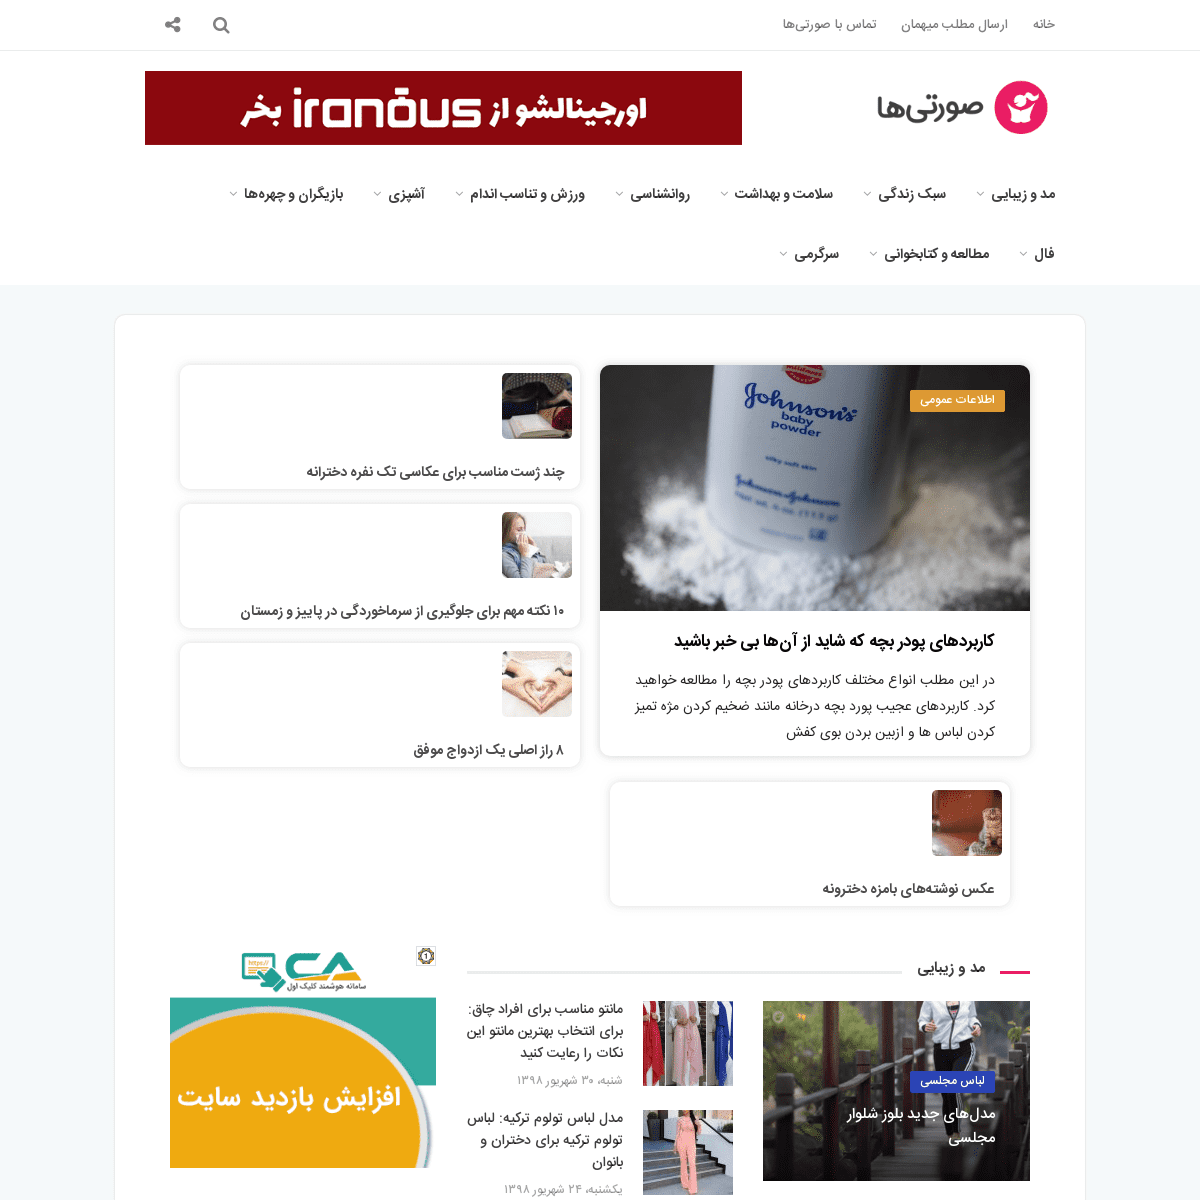 A complete backup of suratiha.com